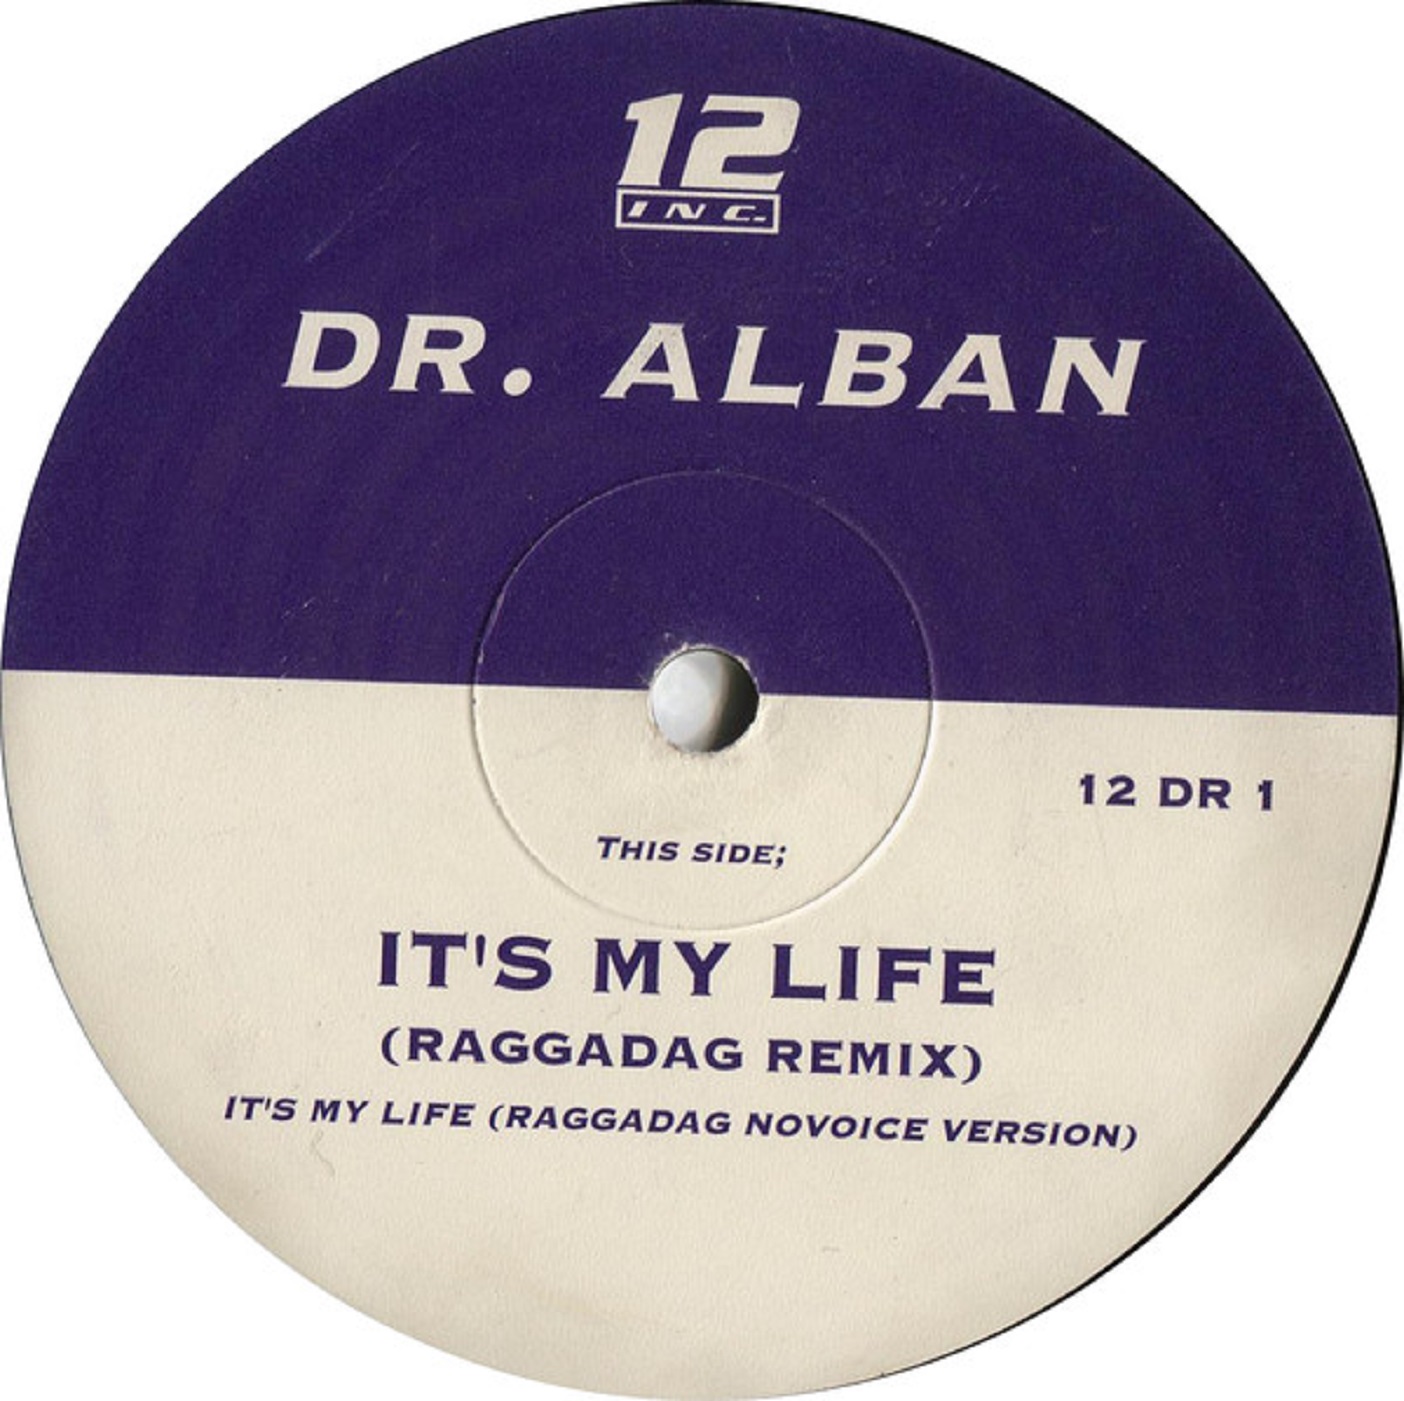 Албан итс май лайф ремикс. Доктор албан ИТС май лайф ремикс. Dr Alban its my Life Raggadag Remix. Dr. Alban - it_s my Life (Raggadag Remix). Dr Alban it's my Life Remix.